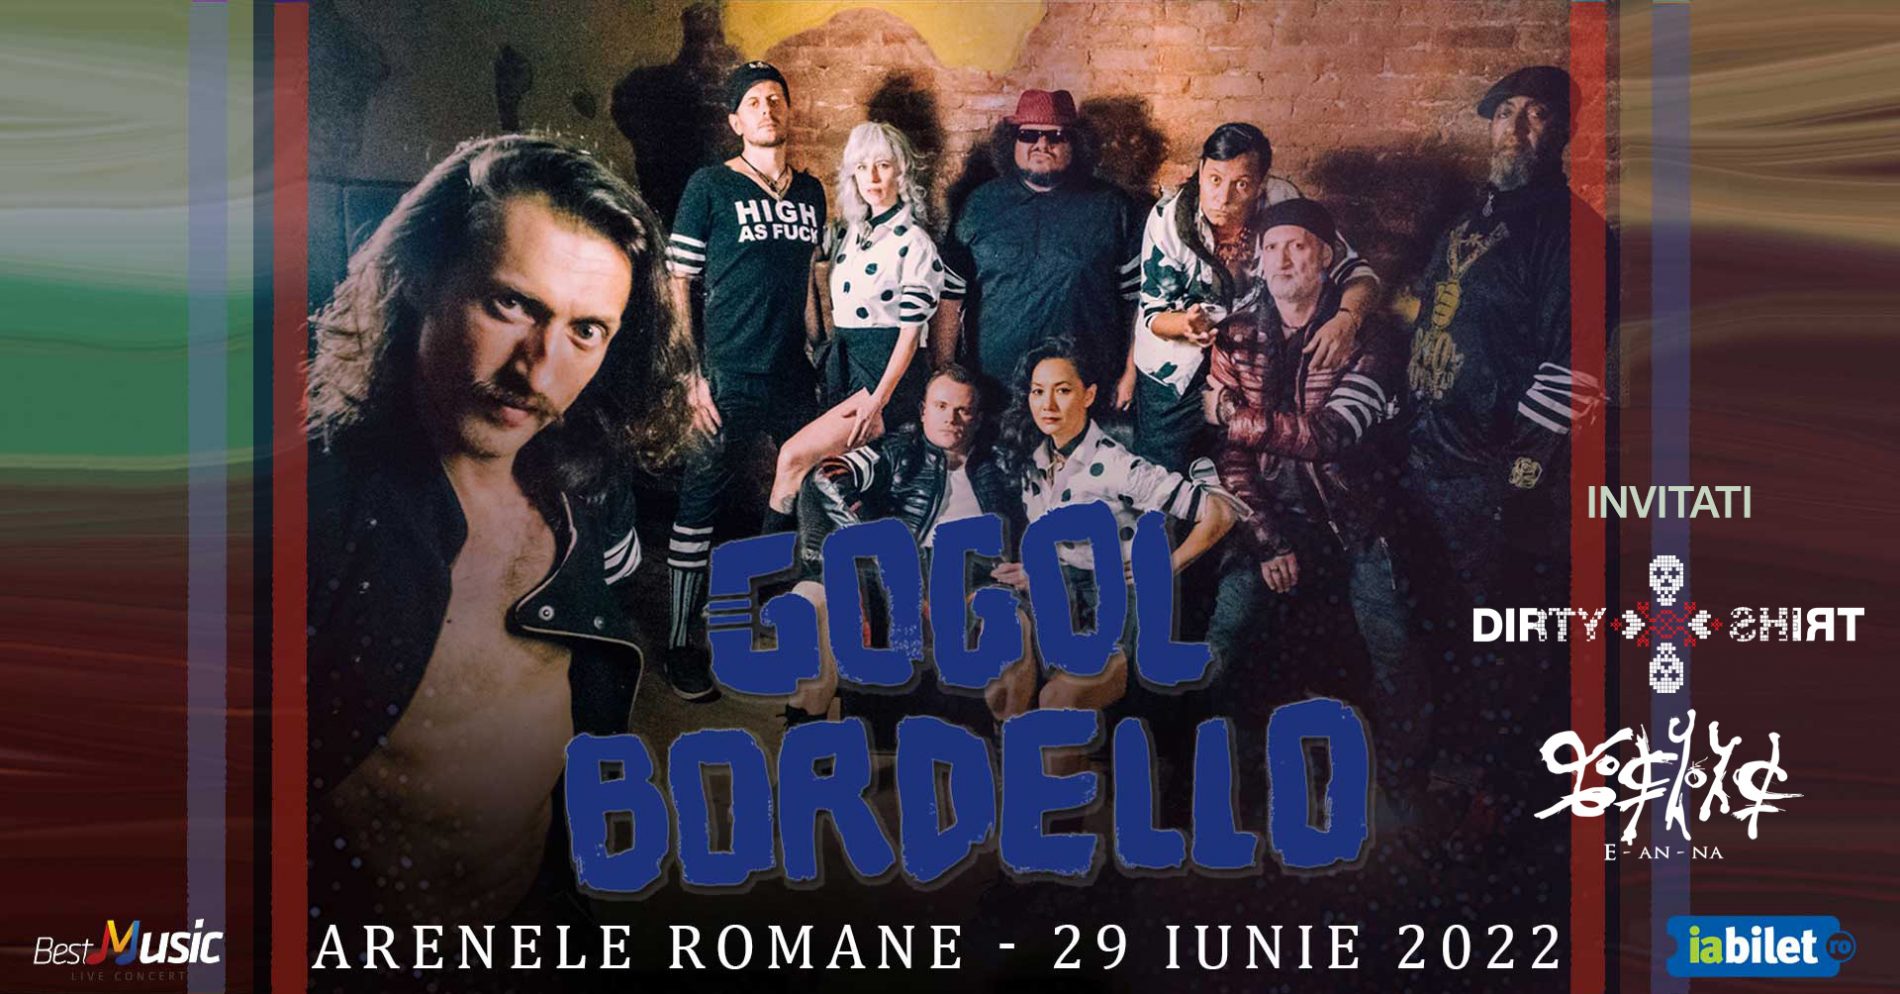 Galerie foto concert Gogol Bordello, Dirty Shirt, E-An-Na la Arenele Romane